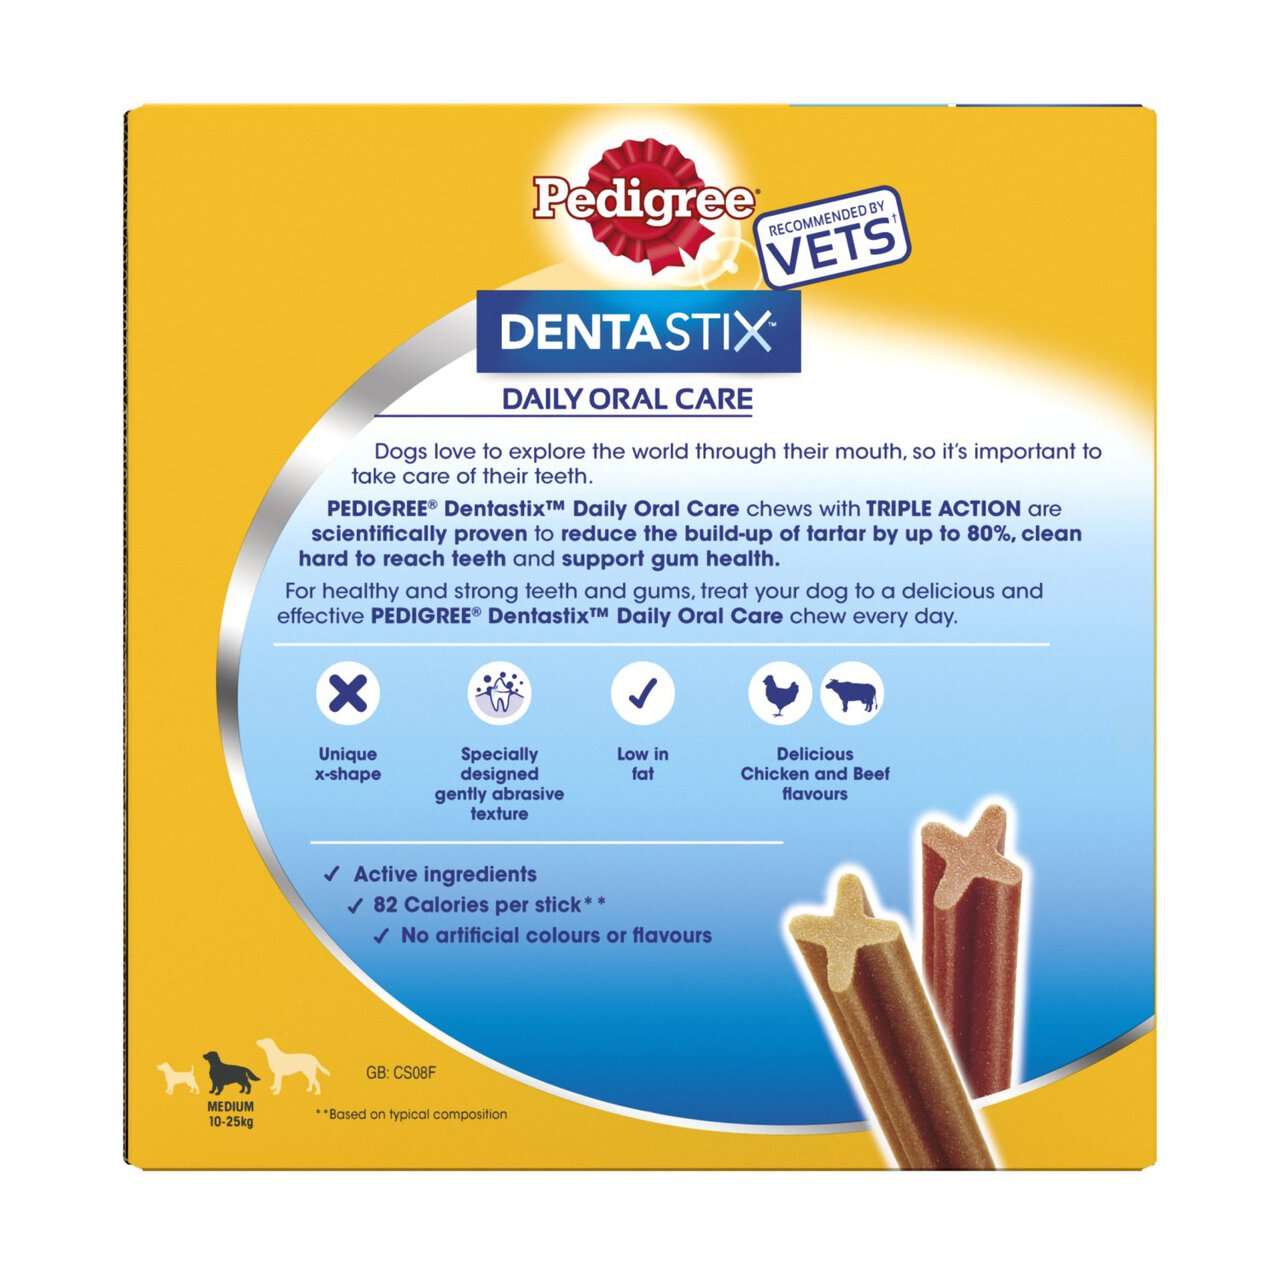 Pedigree Dentastix Daily Adult Medium Dog Treats Dental Sticks 56 x 26g